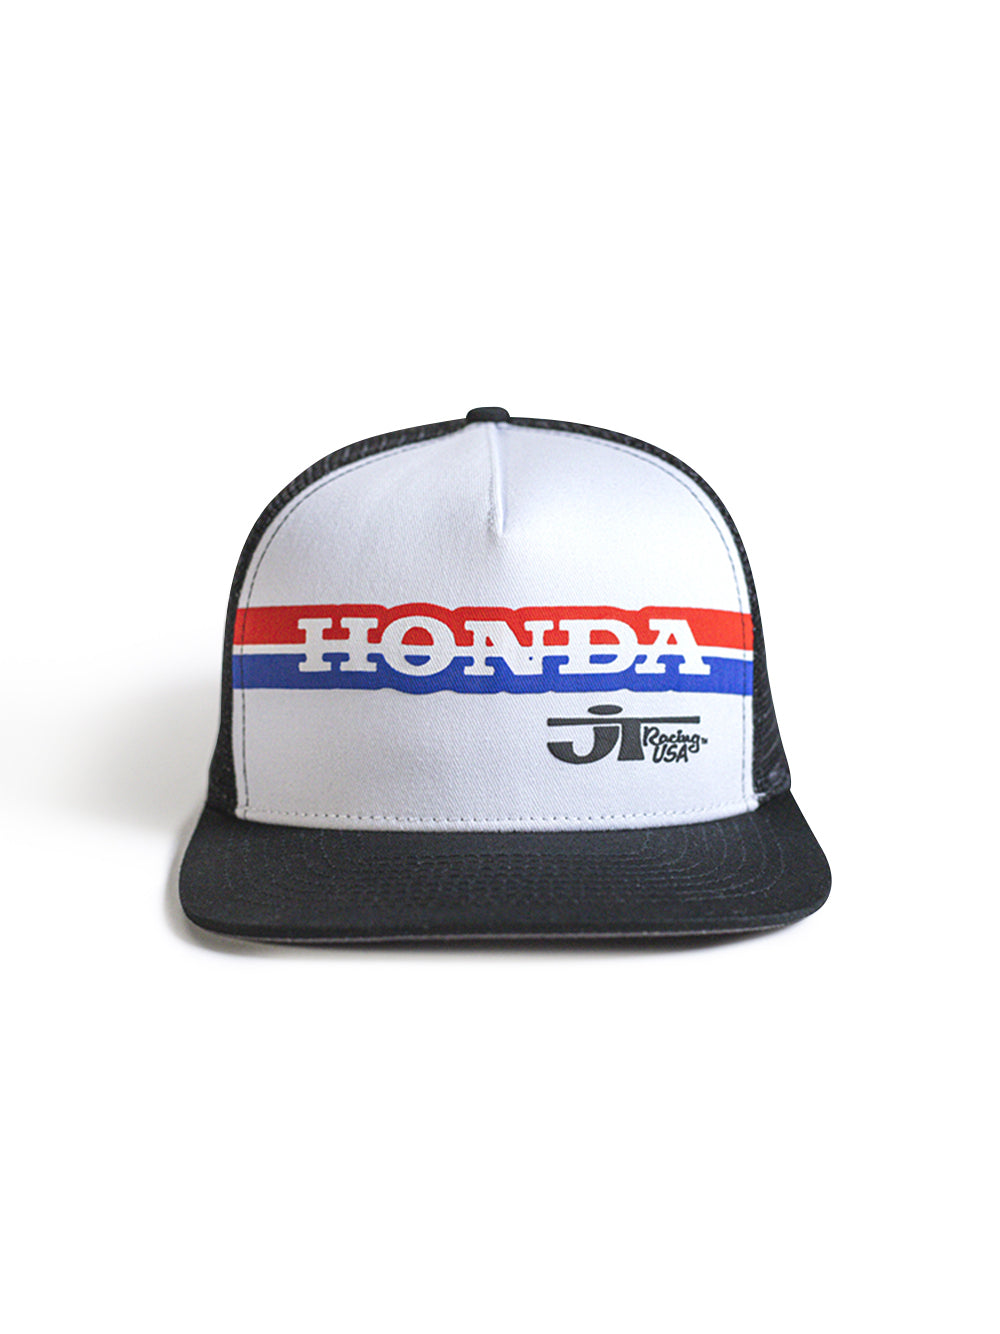 JT Racing x Honda Heritage Trucker Hat - Black